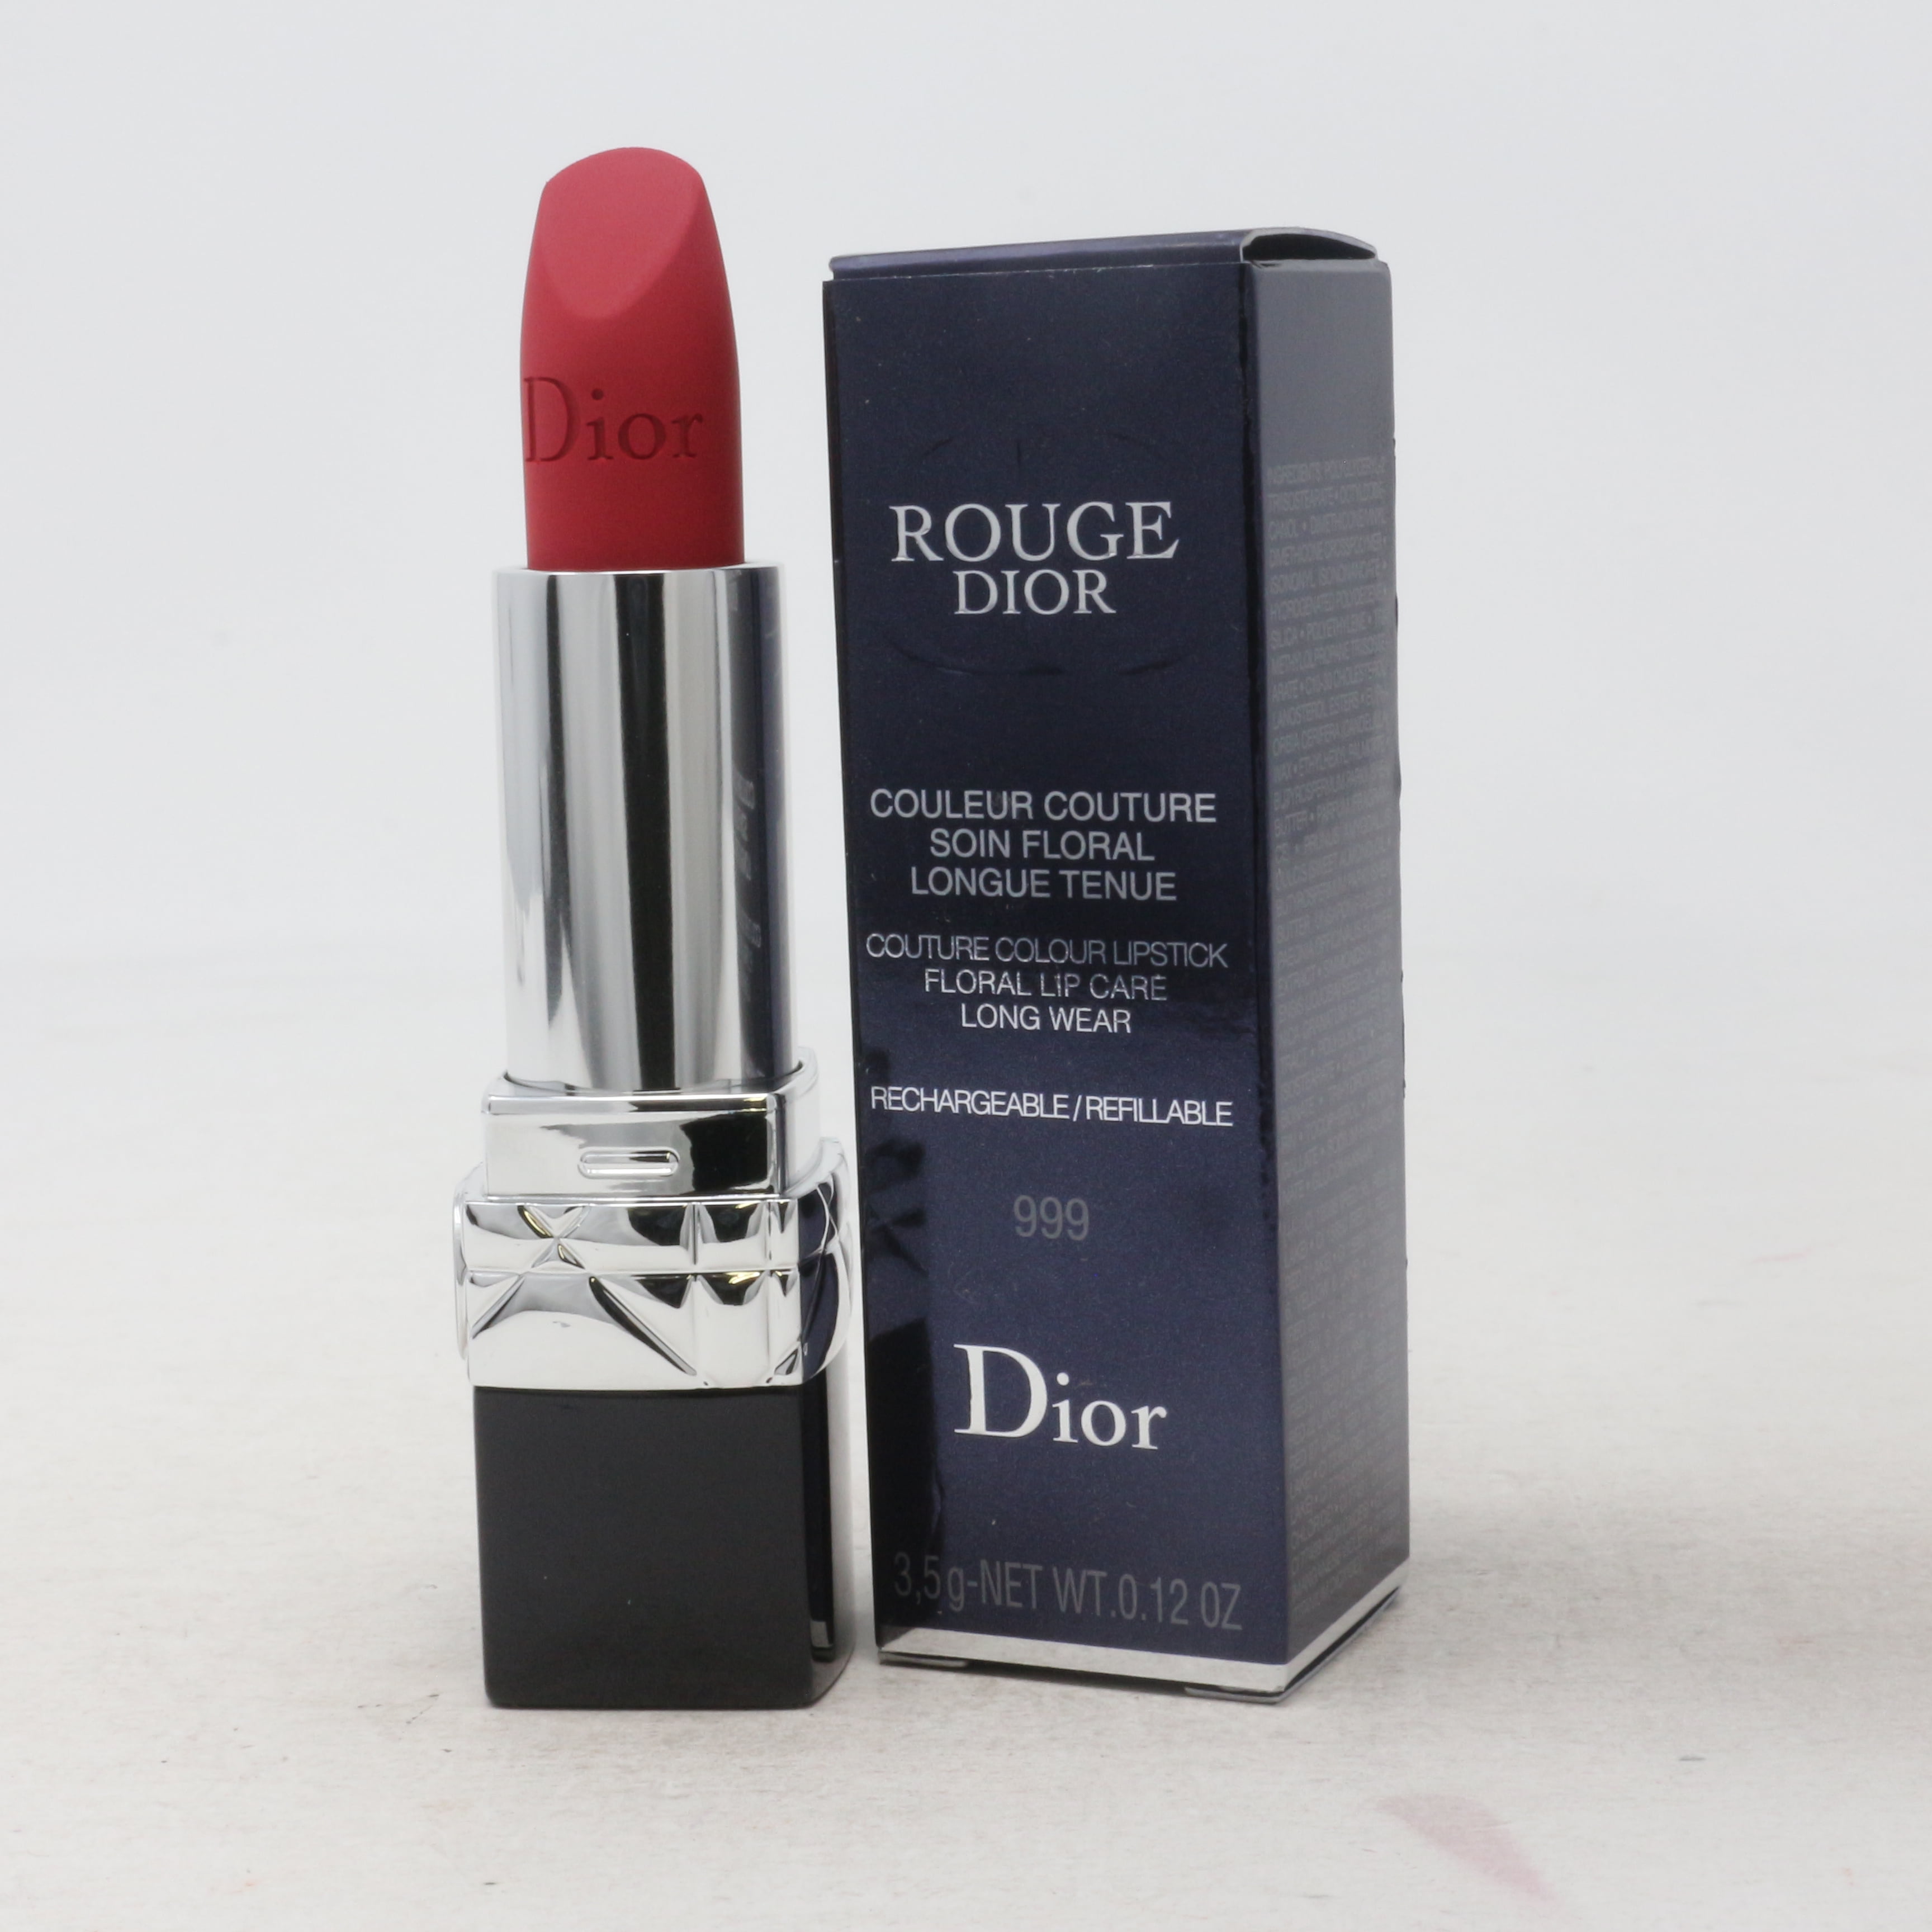 Christian Dior Rouge Dior Couture Lipstick Matte - 999 Red 0.12 oz Lipstick  (Refillable) 